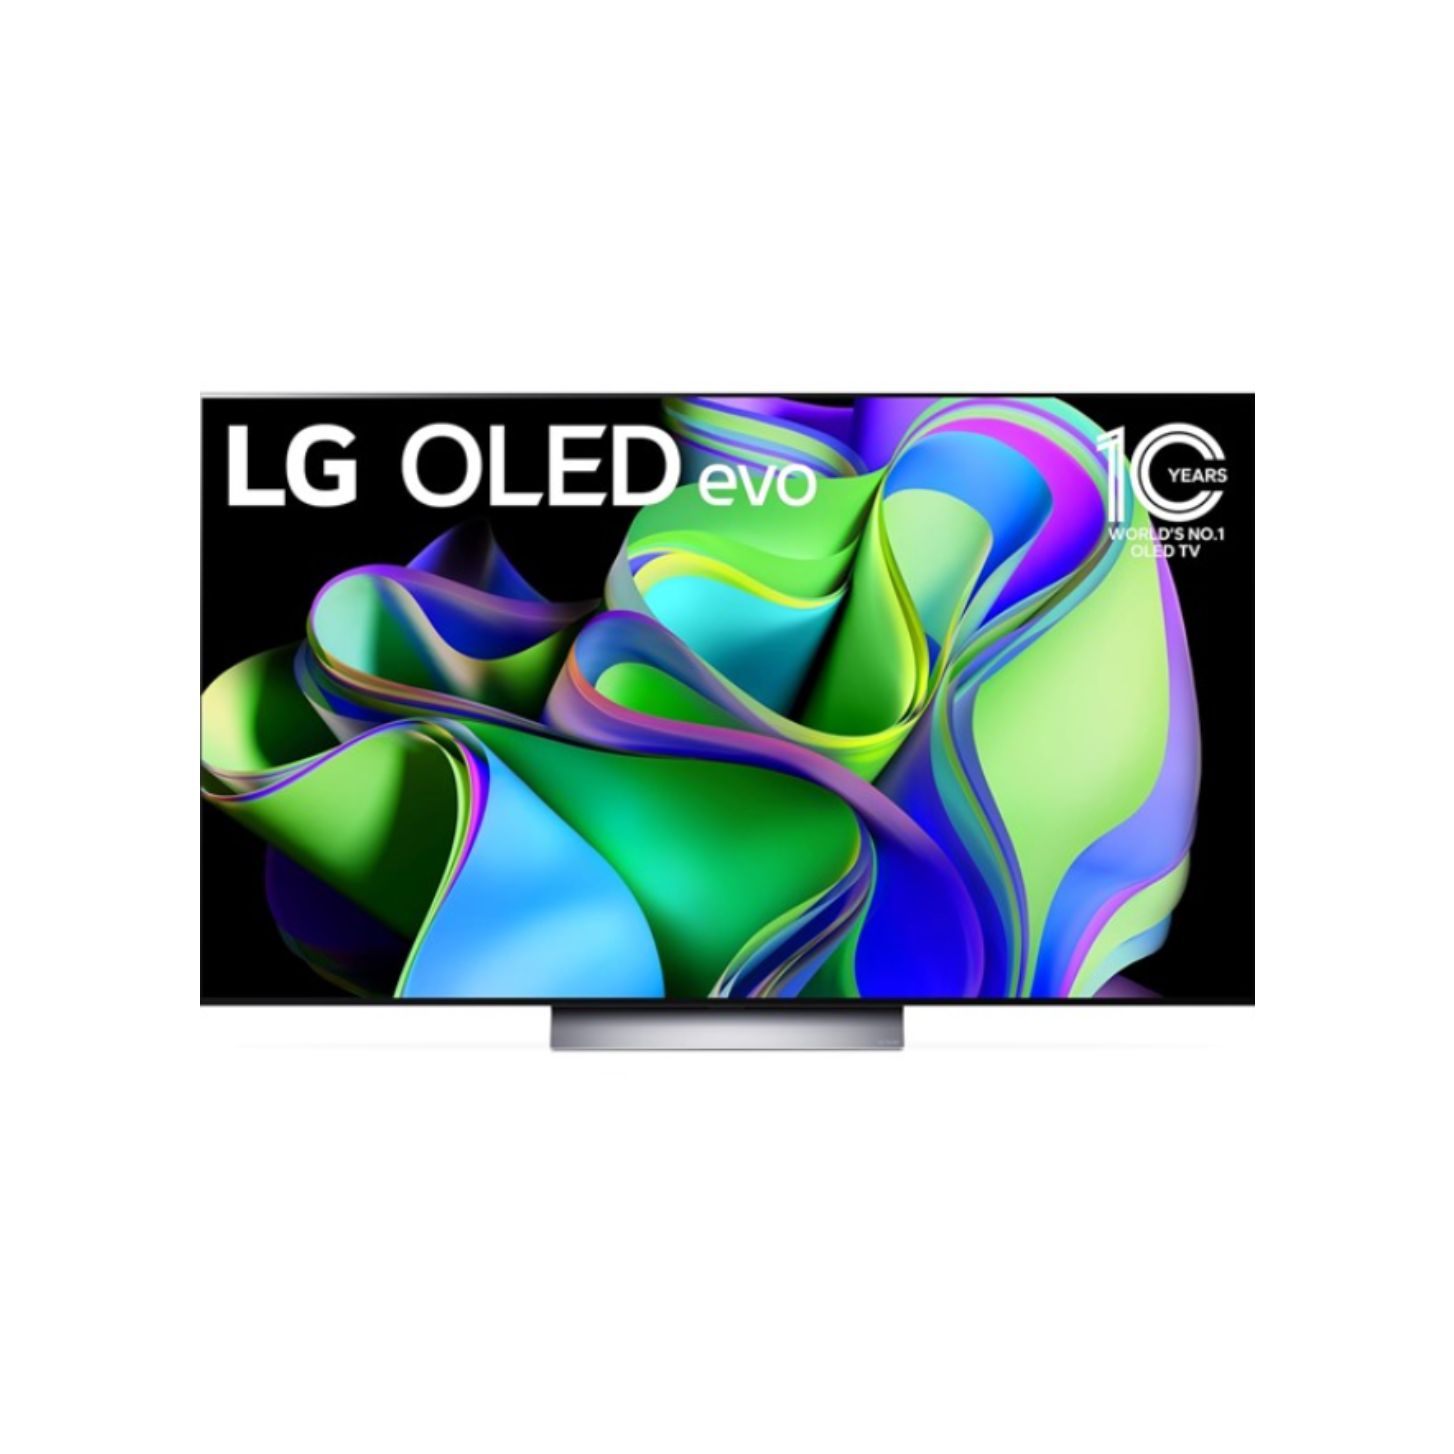 LG OLED42C3PUA 42" 4K Ultra HDR Smart OLED evo TV